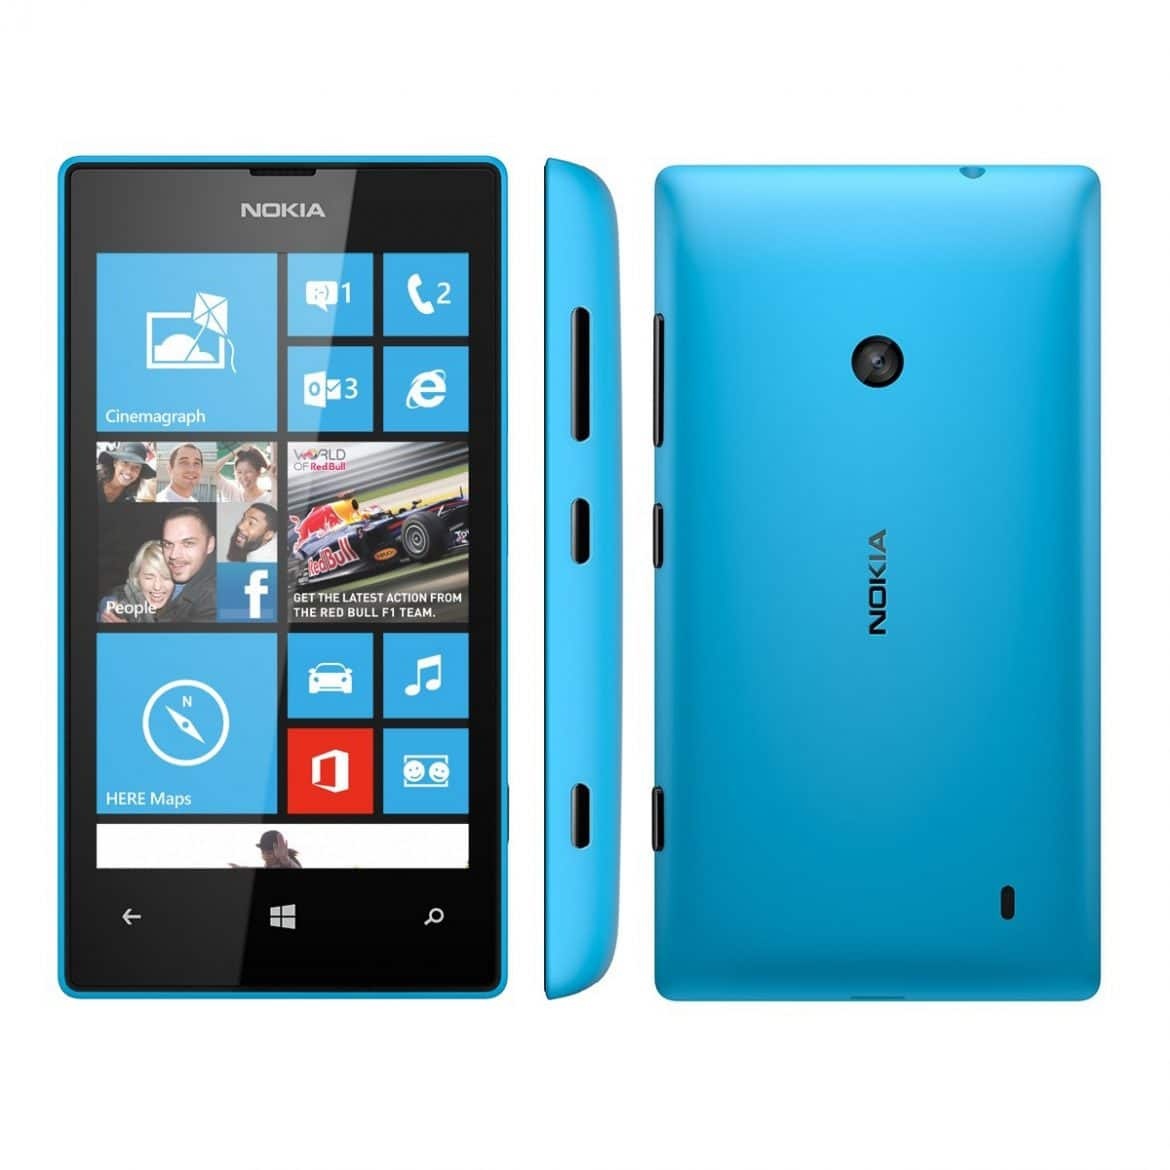 Nokia 435 Lumia Dual Sim